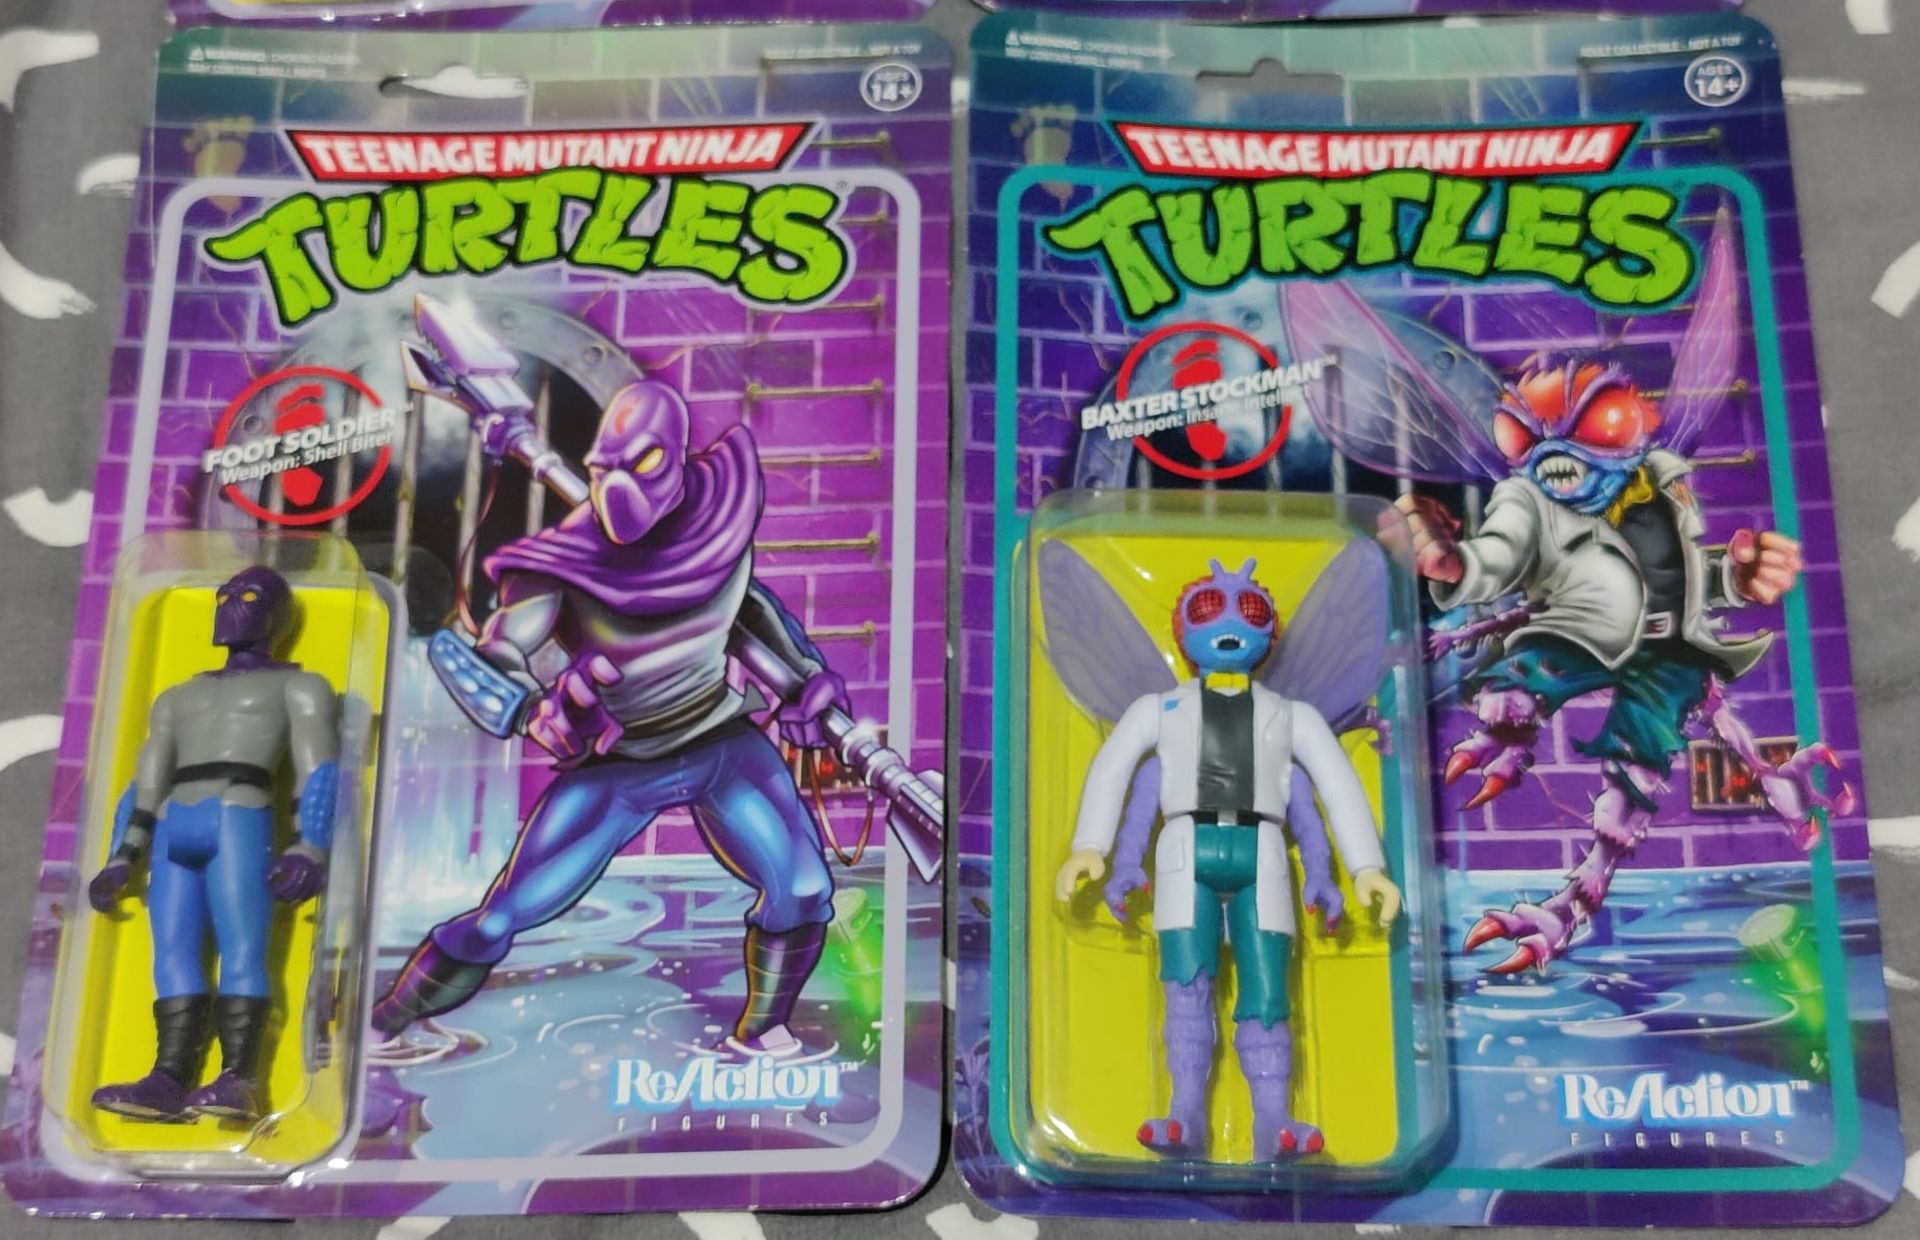 4 x Teenage Mutant Ninja Turtles Actions Figures - New and Sealed - Image 2 of 4